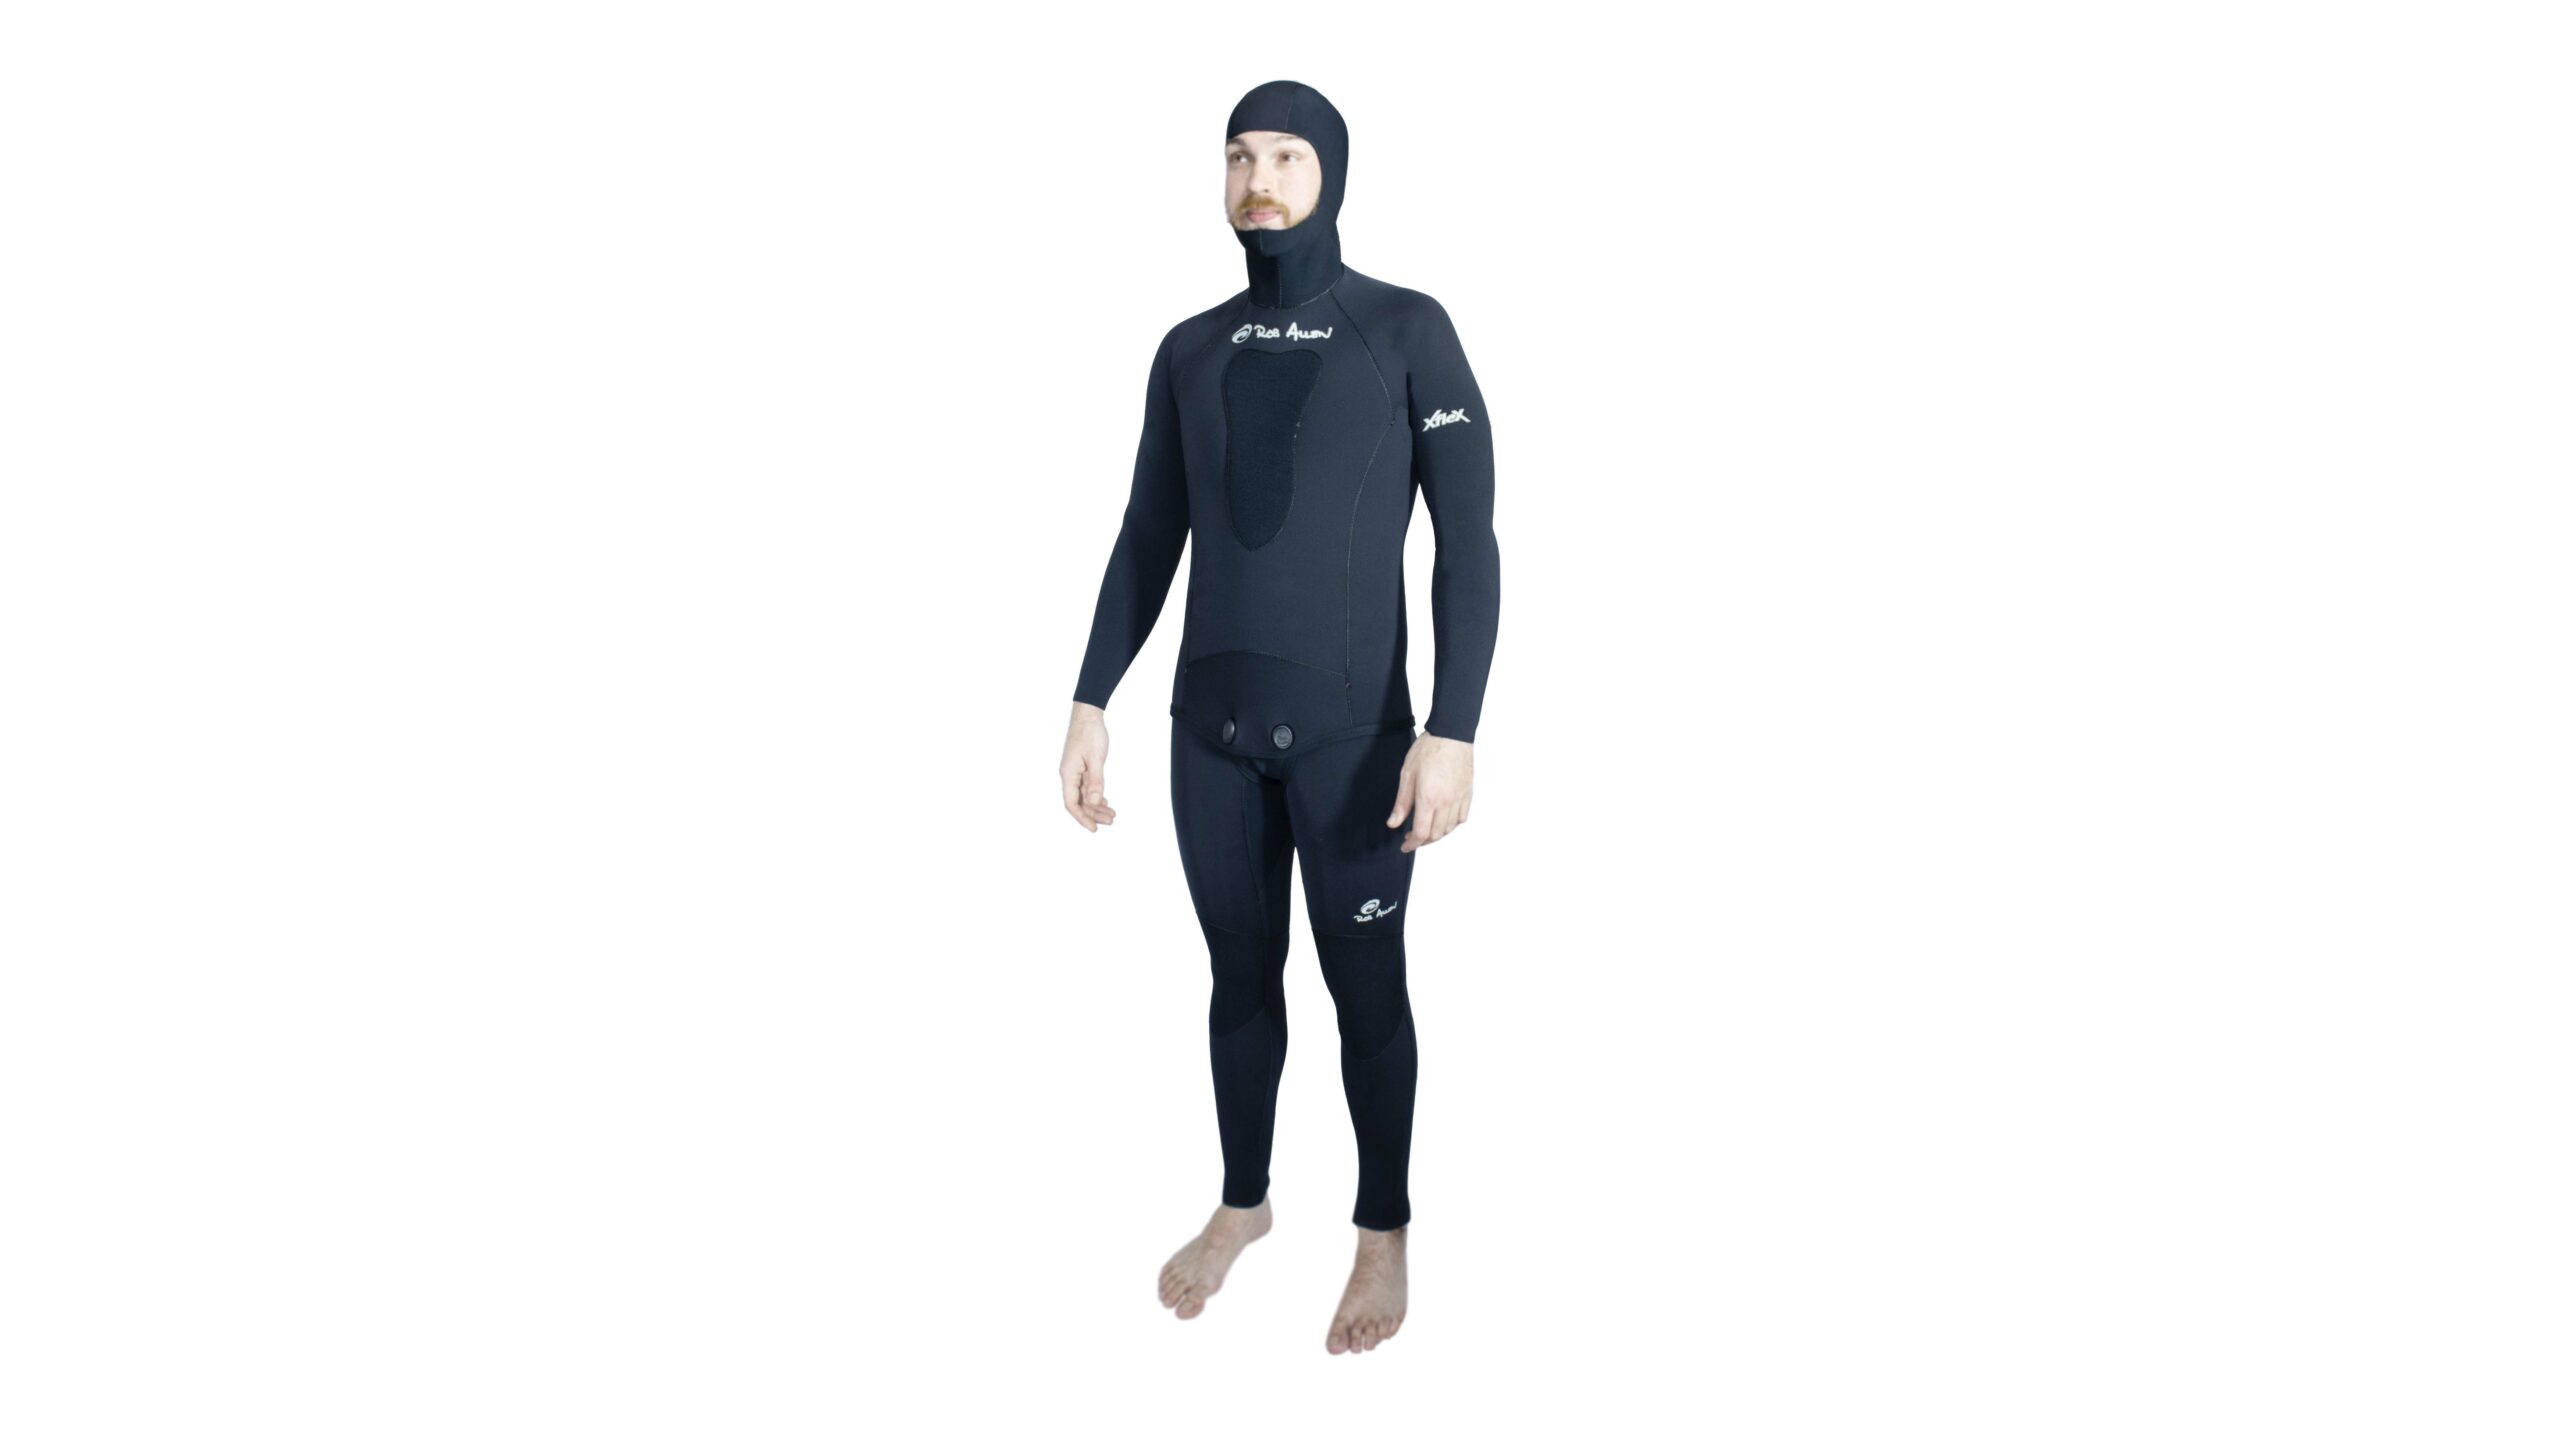 rob-allen-wetsuit-black-front